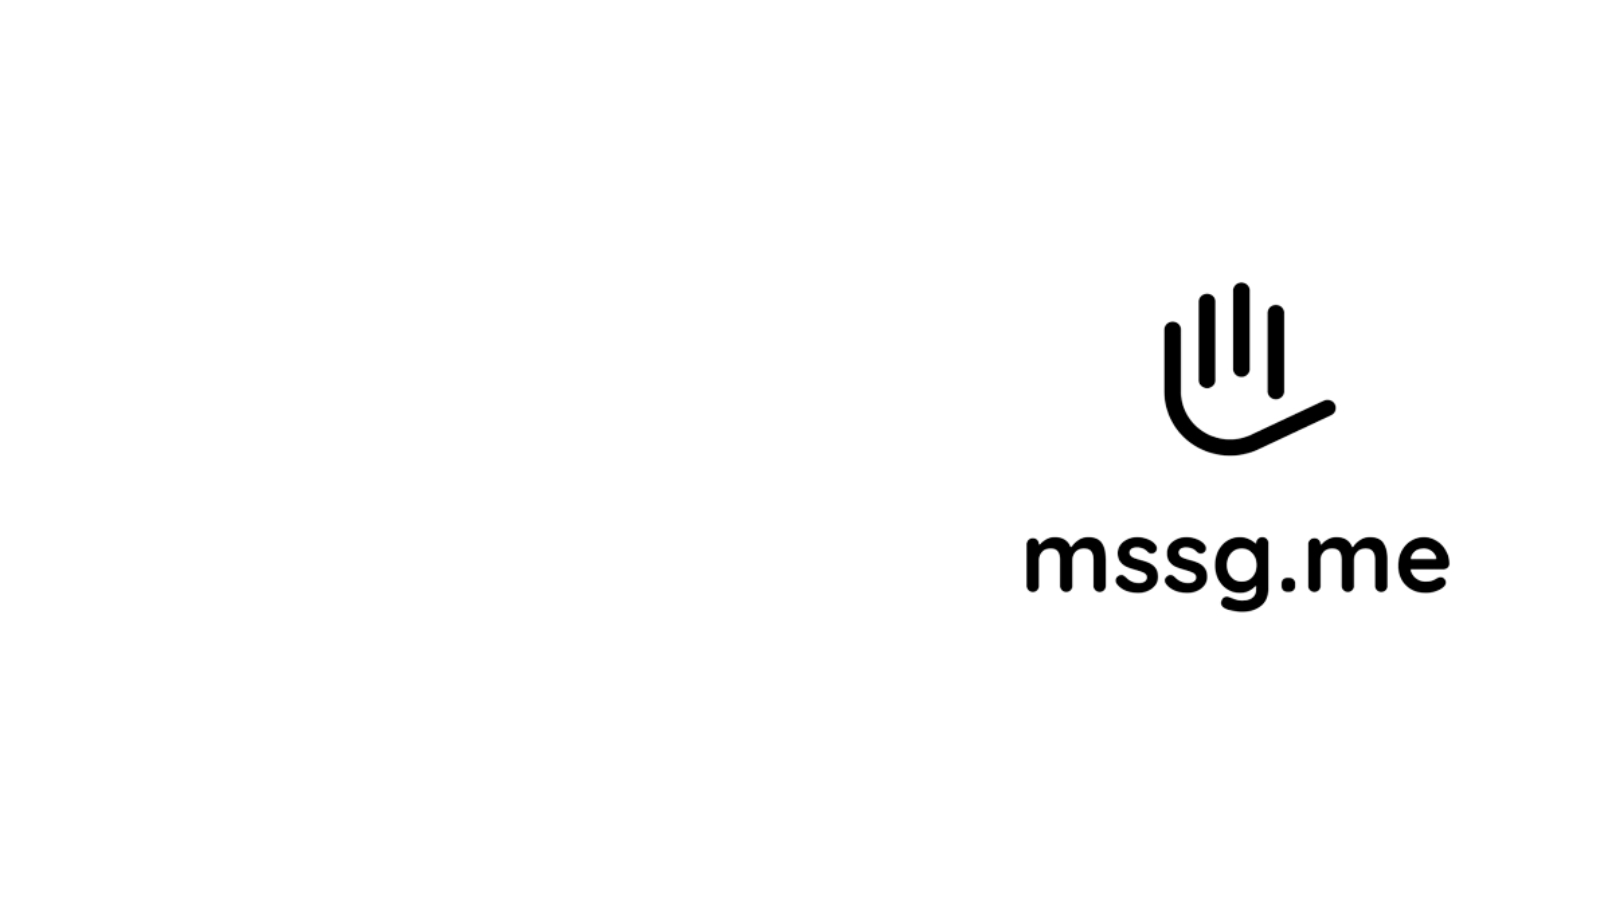 A logo of Mssg.me